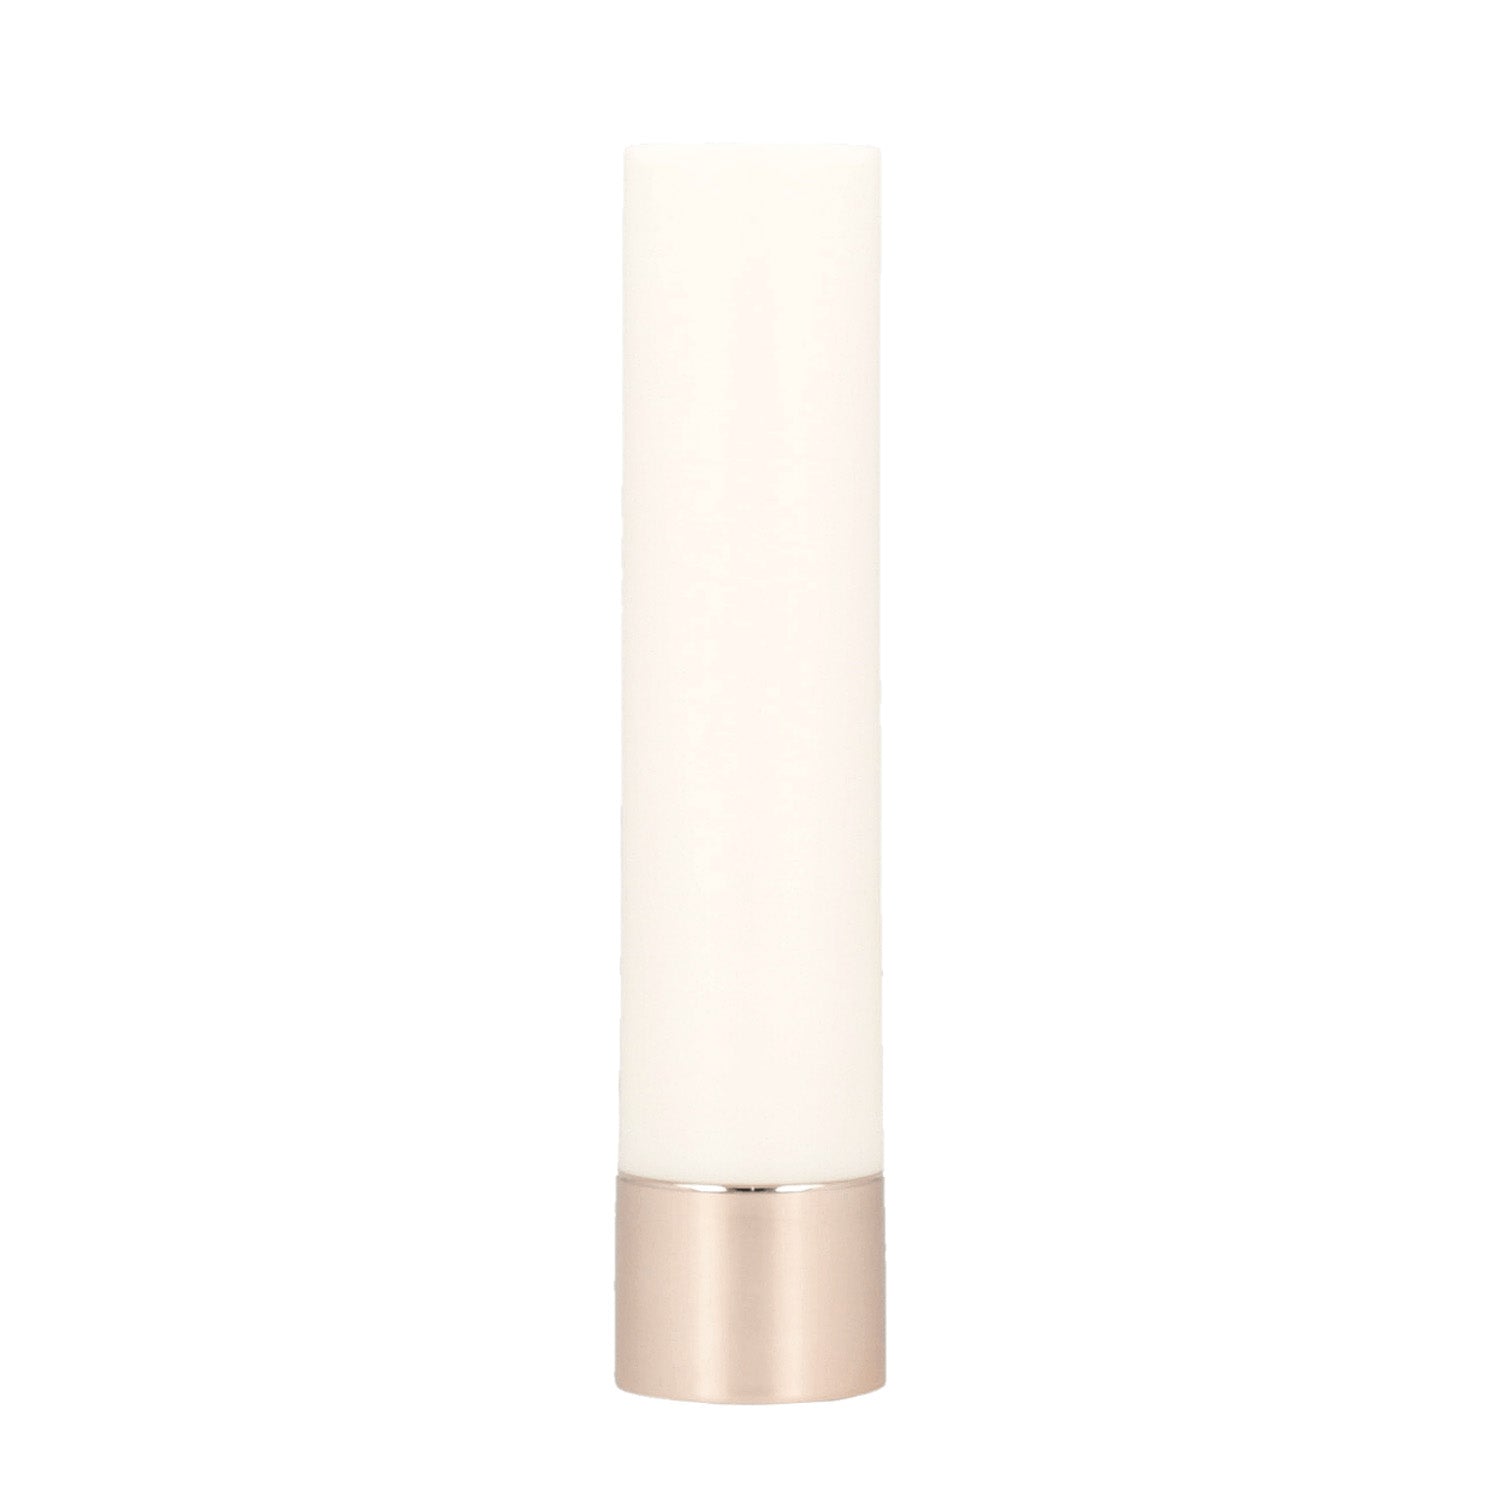 Picture showing d'Alba Air Fit Fresh Sun Stick 19g SPF50+ PA++++ anti-fresh moisturizer.